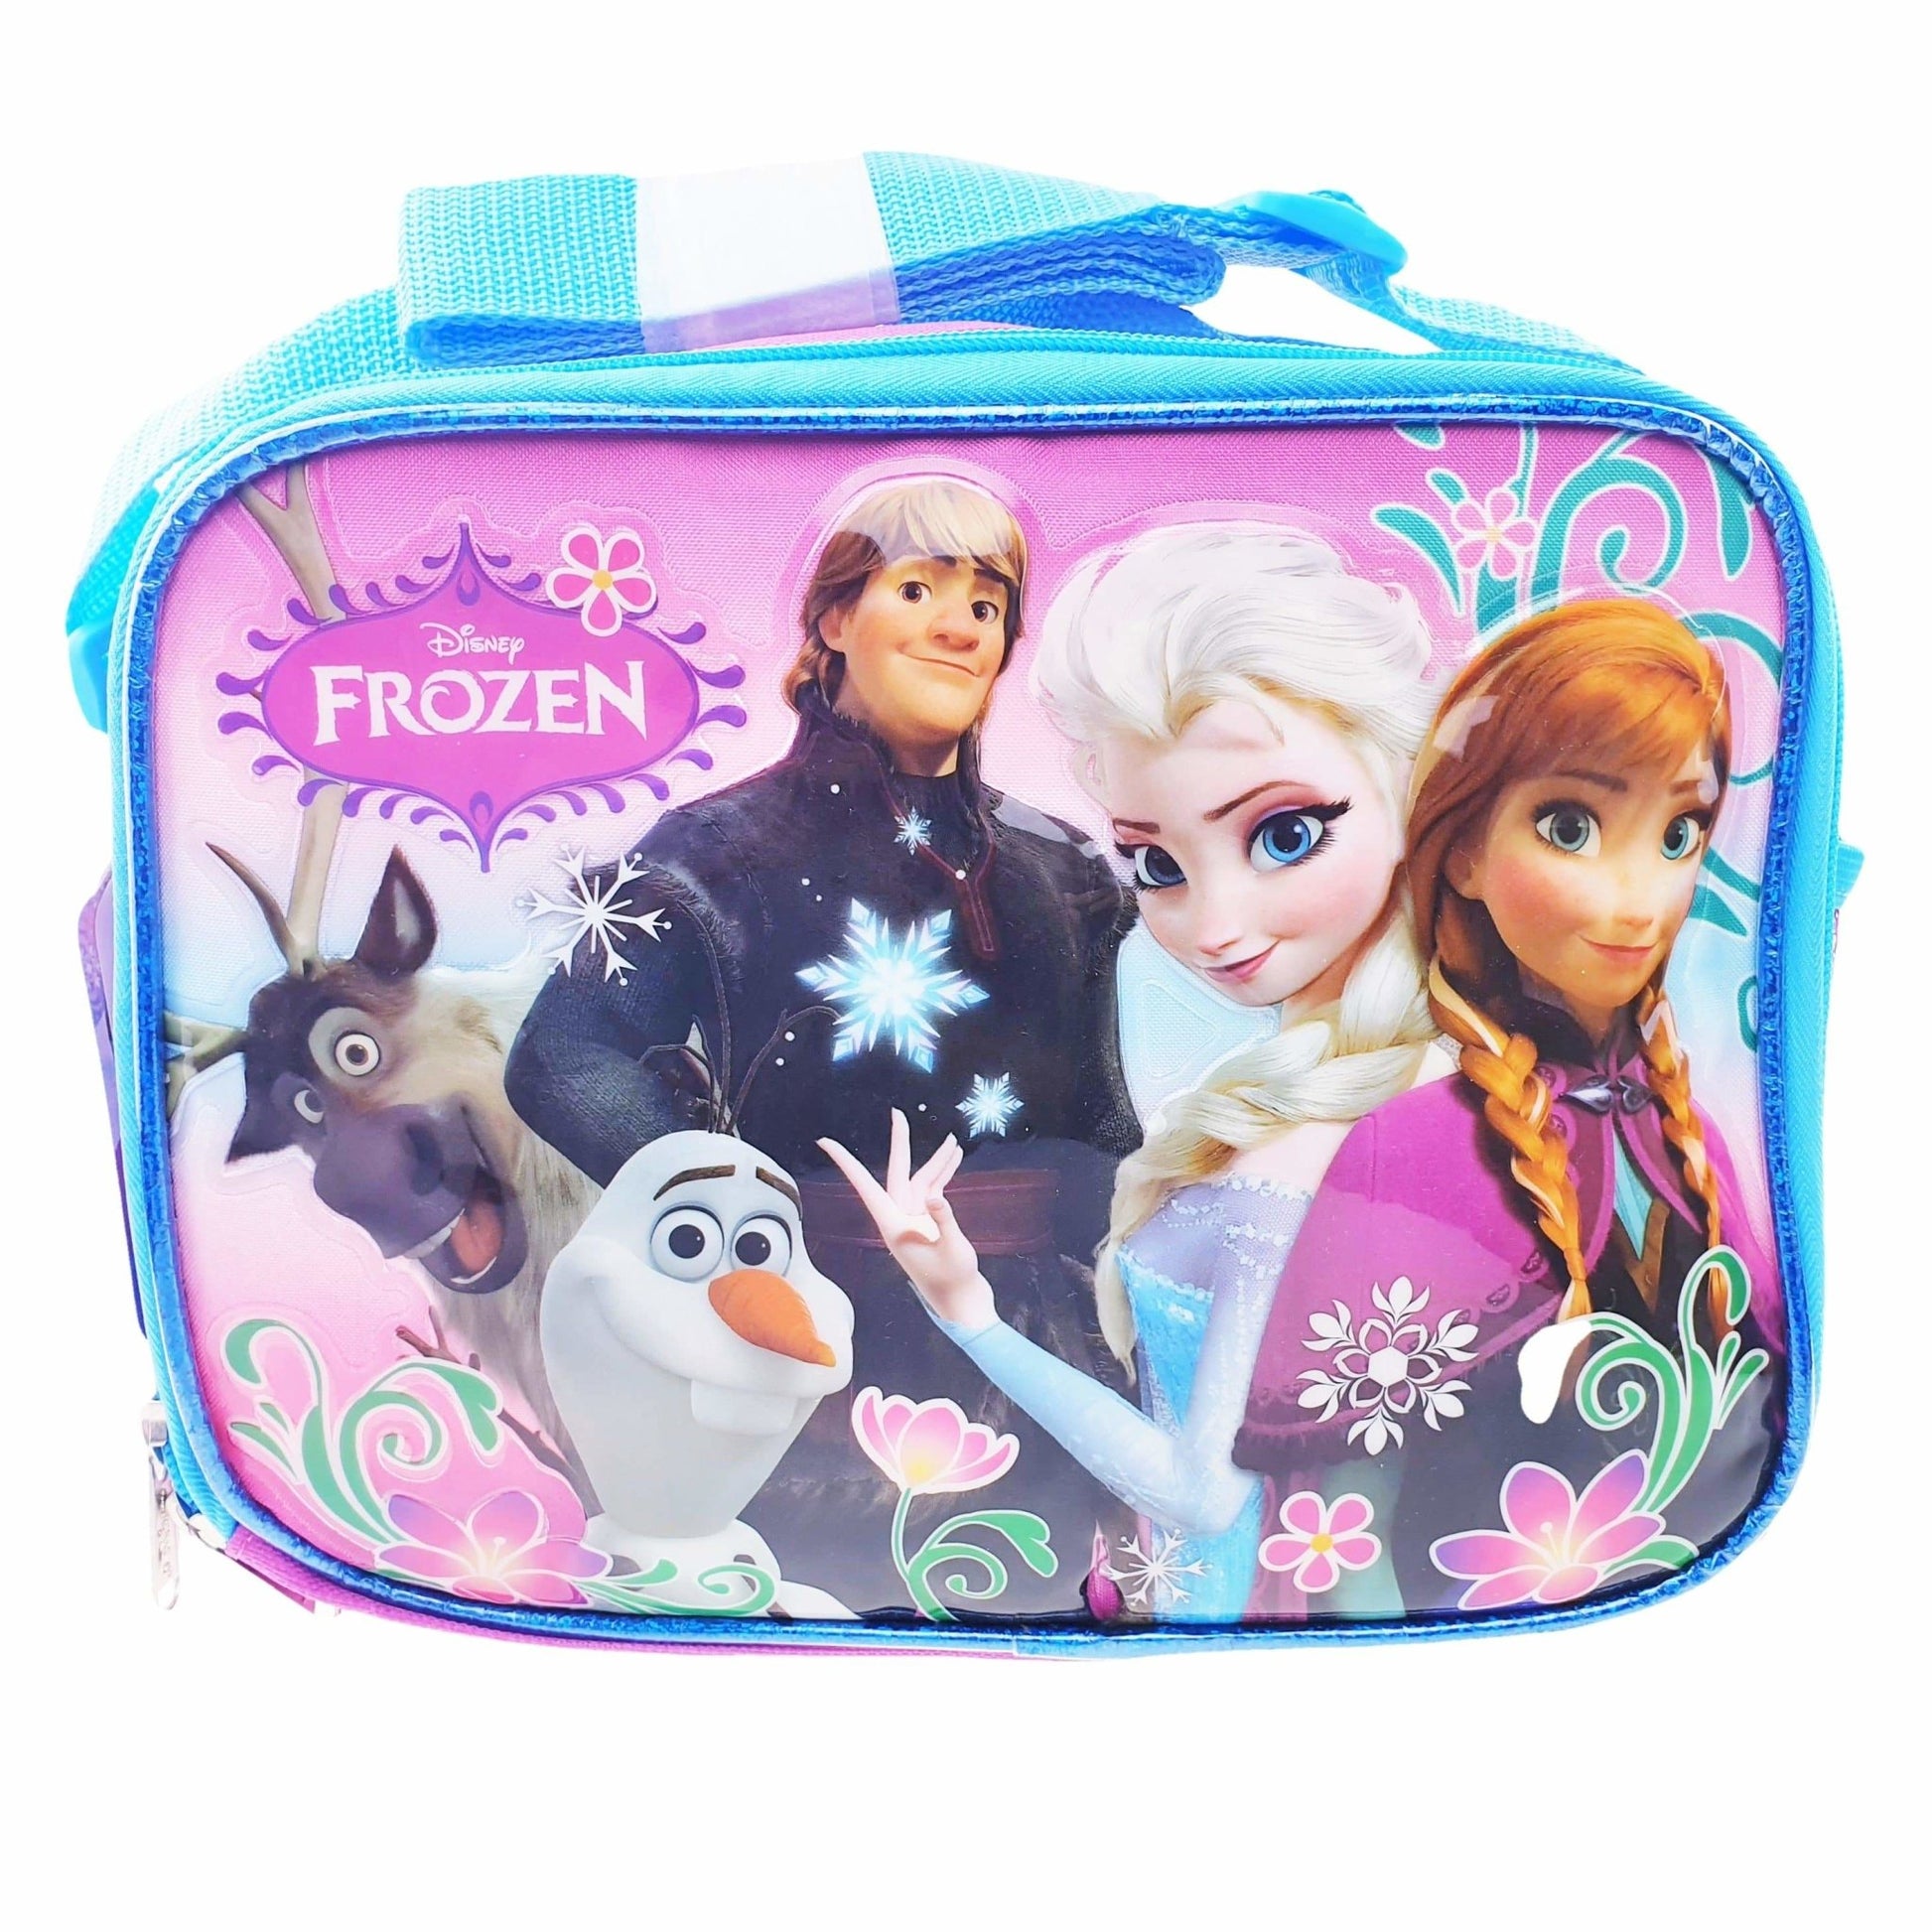 Disney Frozen - Lunch Kit / Sling Tote Bag (Shoulder Bag, Cross Body Bag) - Various Designs - Simply Life